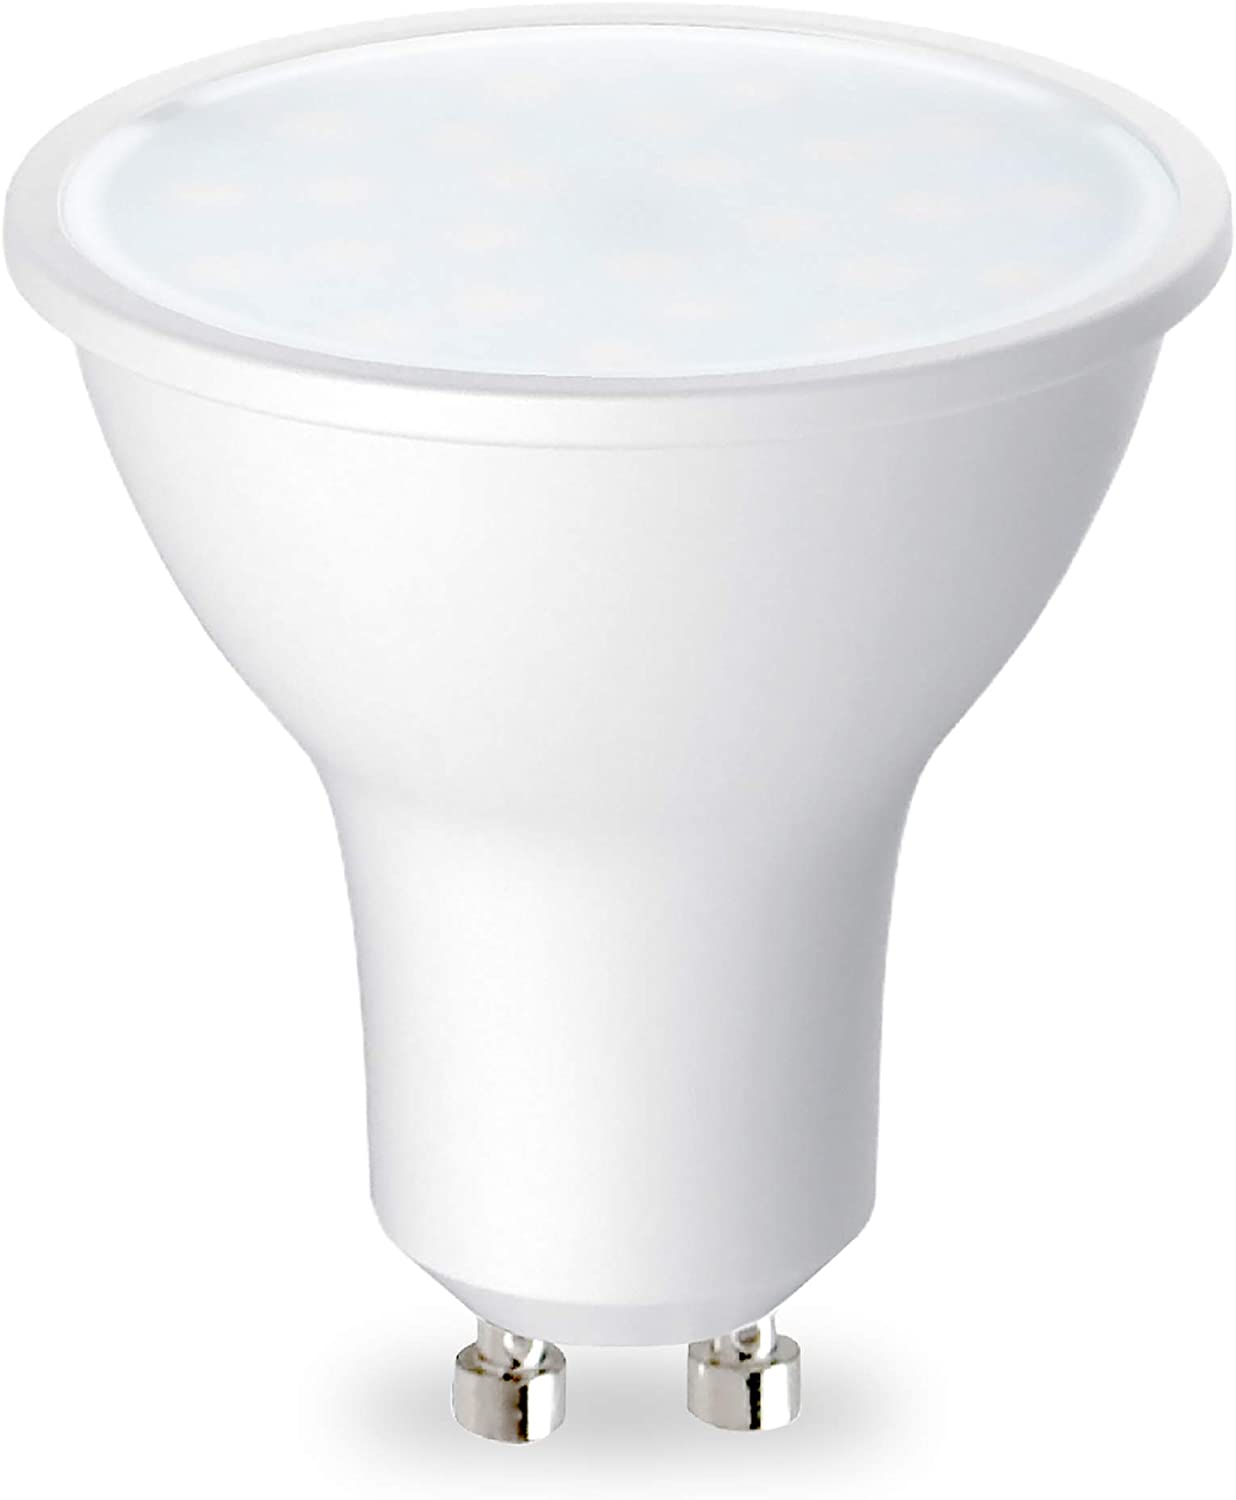 Sylvania Refled ES50 V4 GU10 LED Dimmable Bulb Lamps 5W GU10 36 Degree